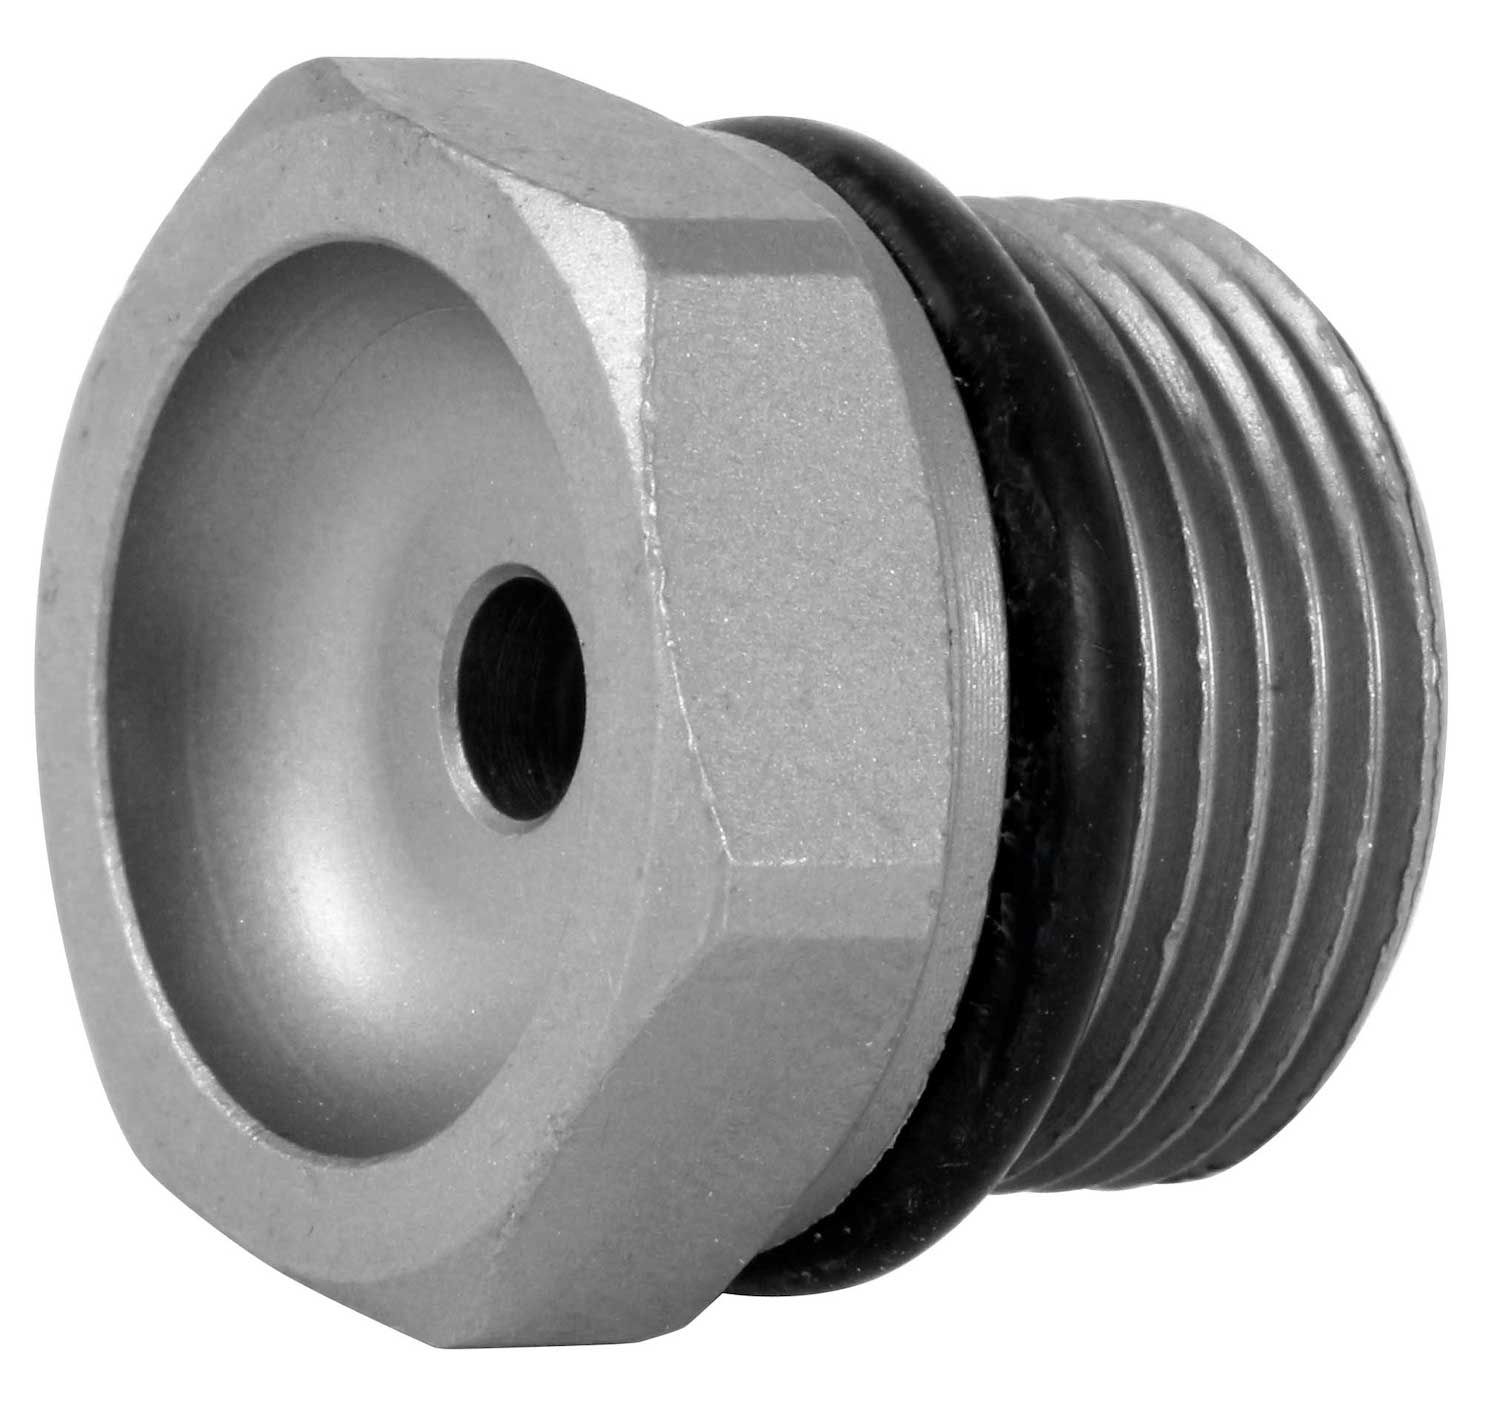 Buse inox pour lance hydro-balayage - calibre 1,2 mm